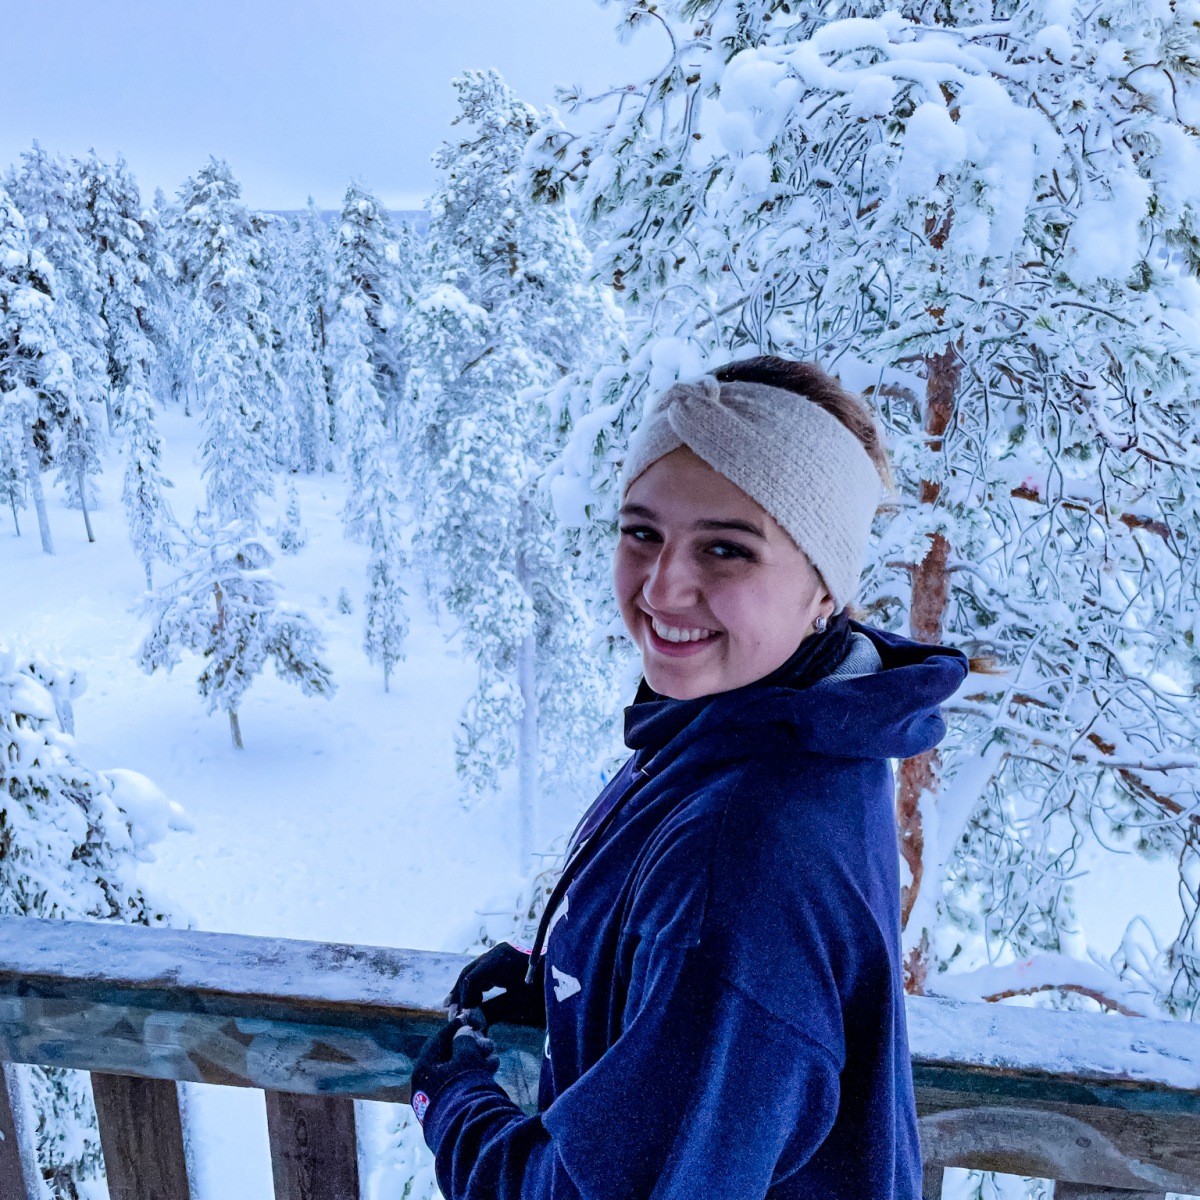 Finland – A winter adventure in Lapland